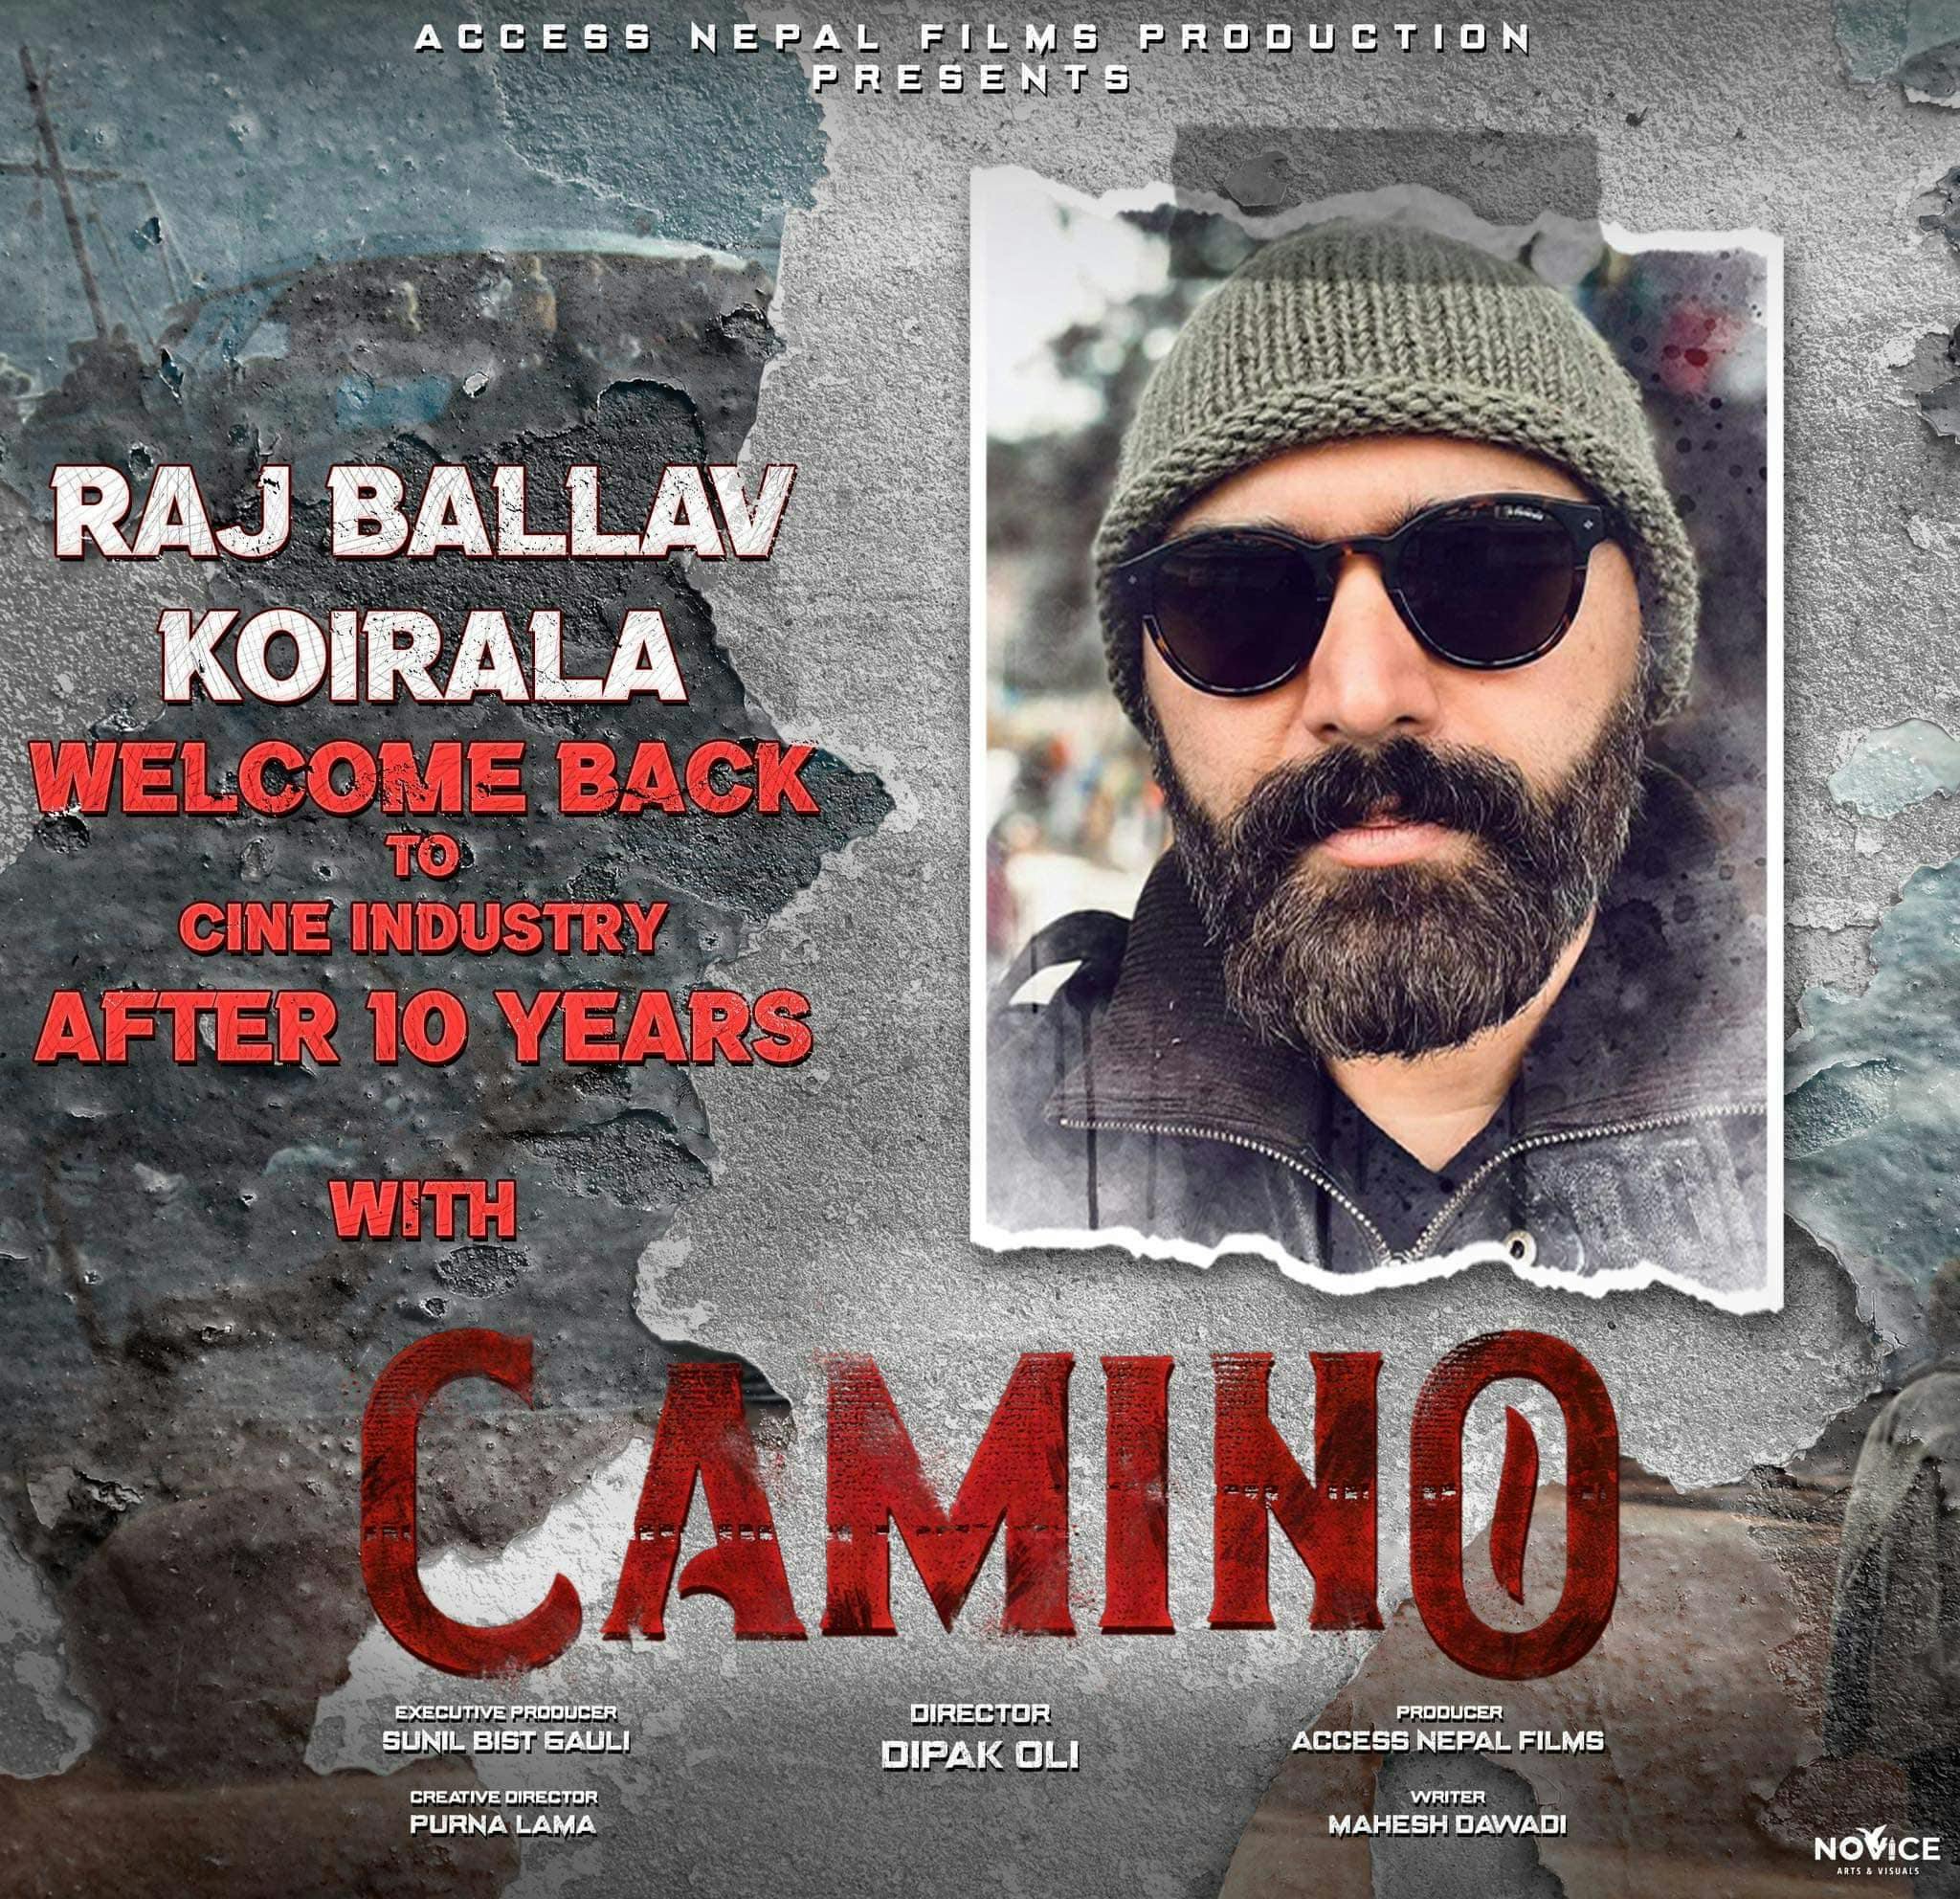 Raj Ballav Koirala is making a comeback to acting after 8 years